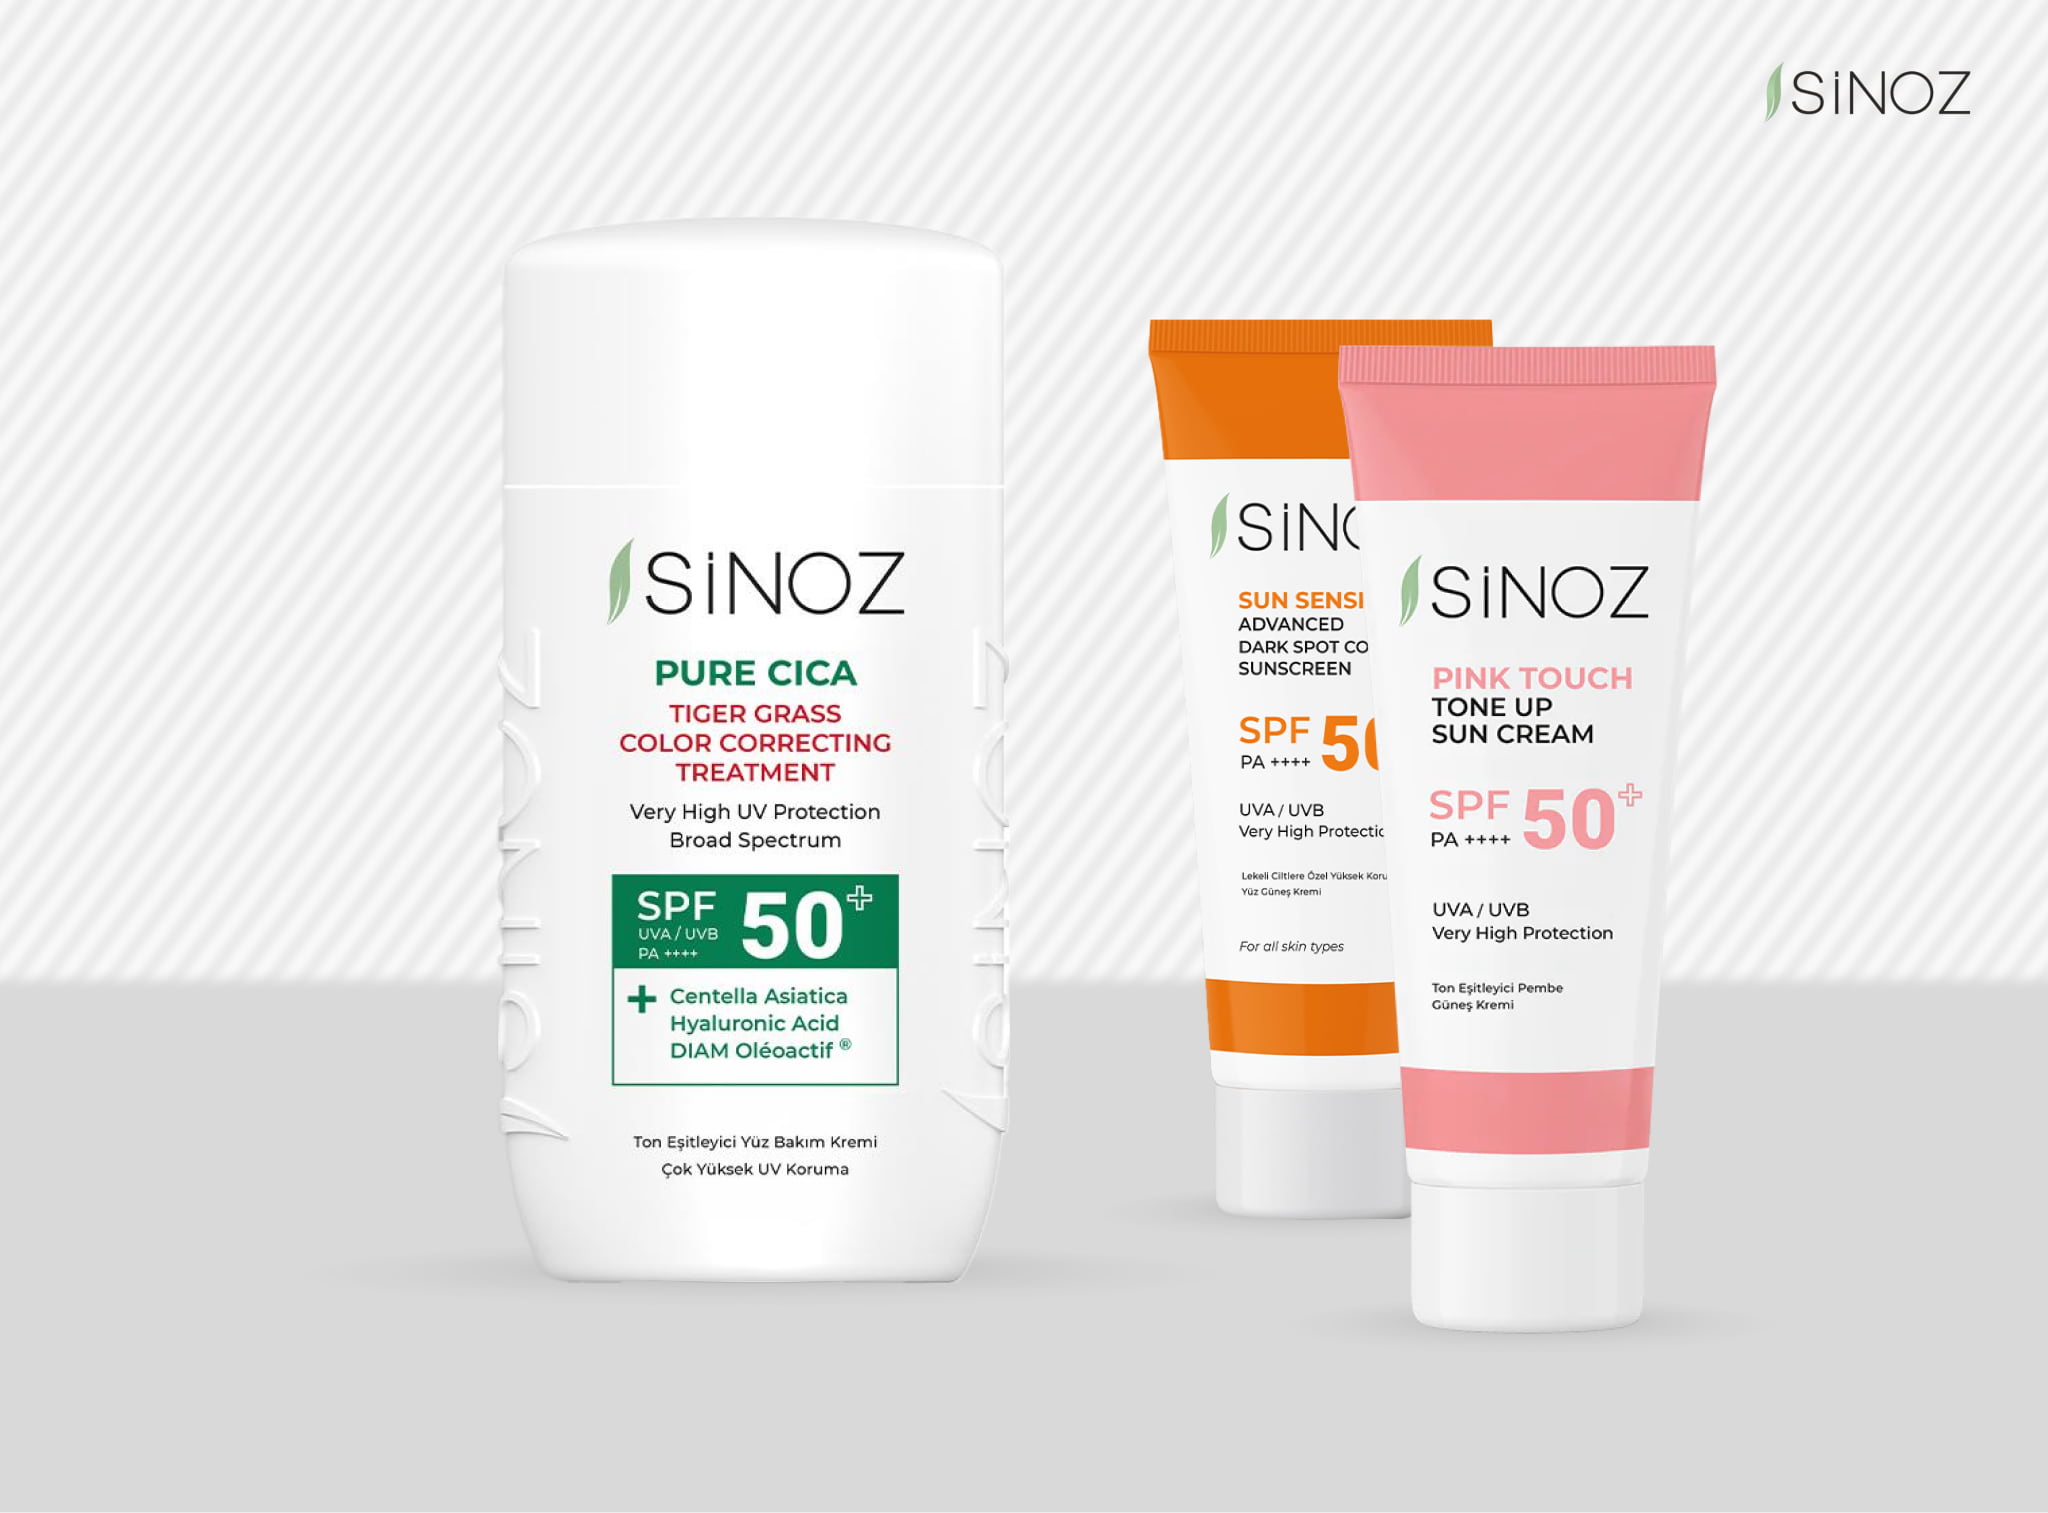 Уход за кожей с продуктами Sinoz